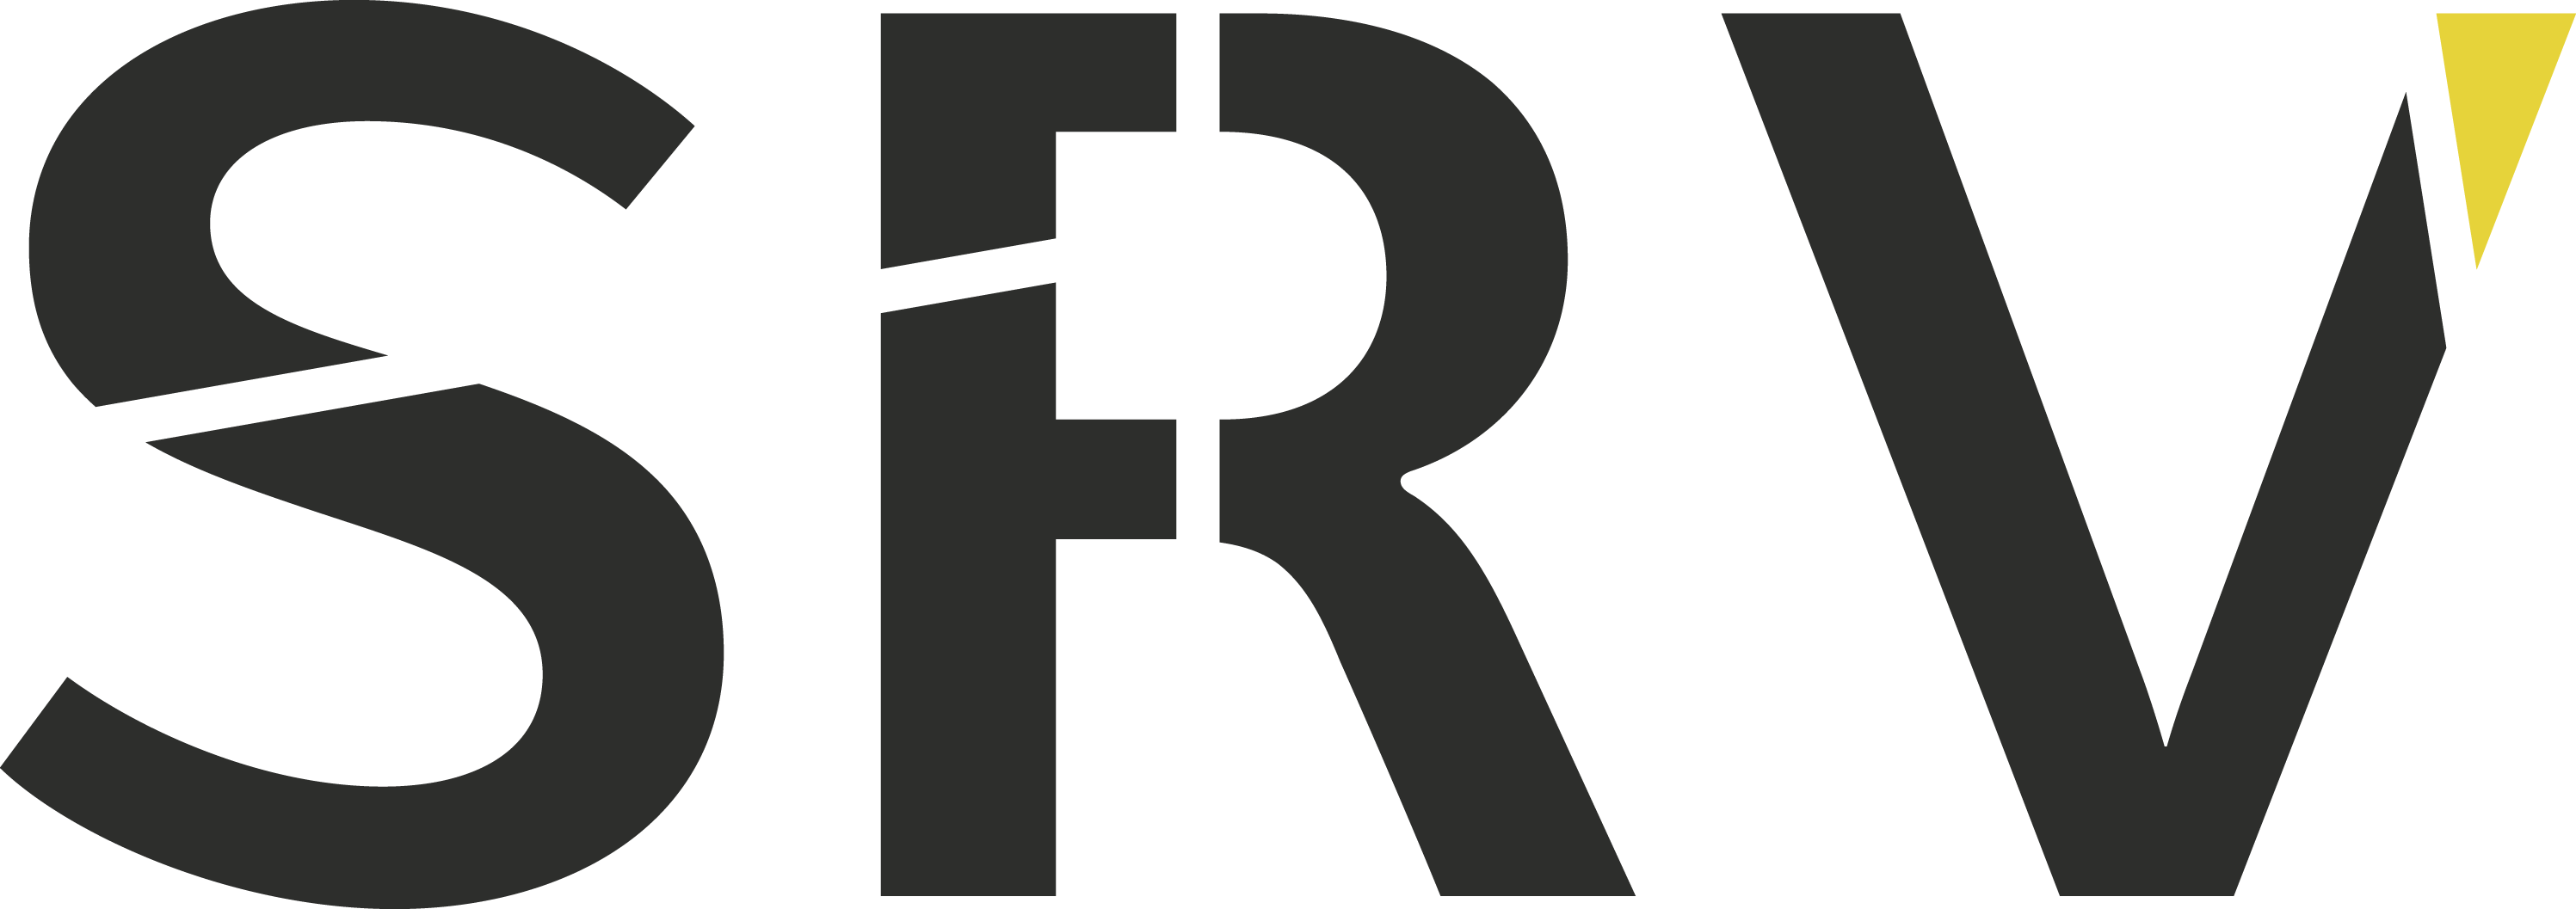 SRV logo referenssi